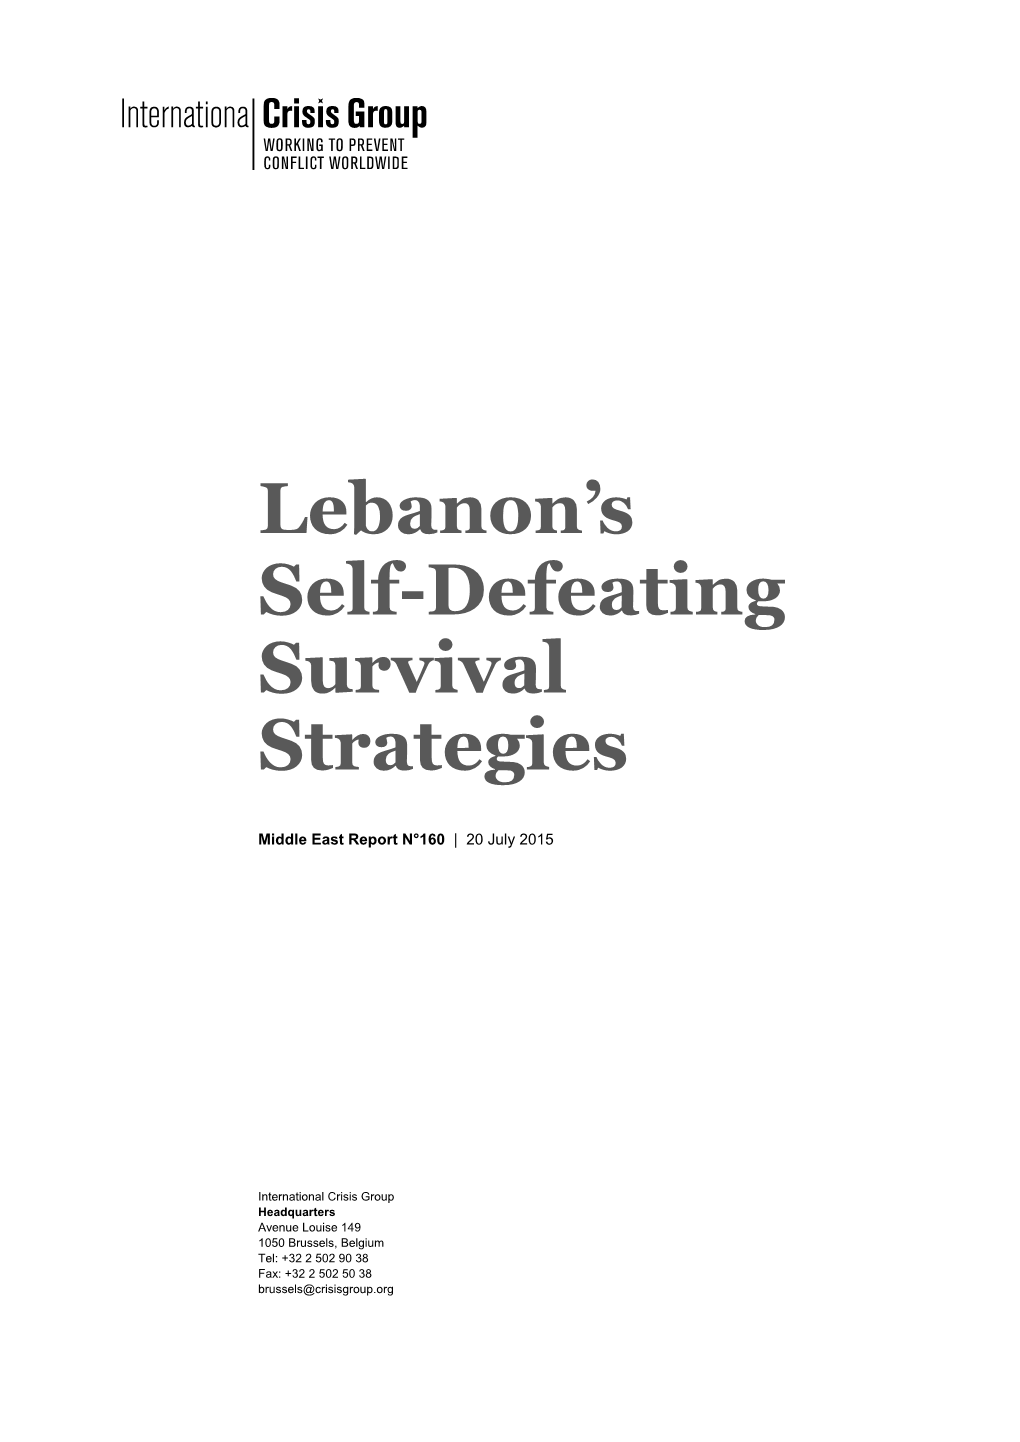 Lebanon's Self-Defeating Survival Strategies